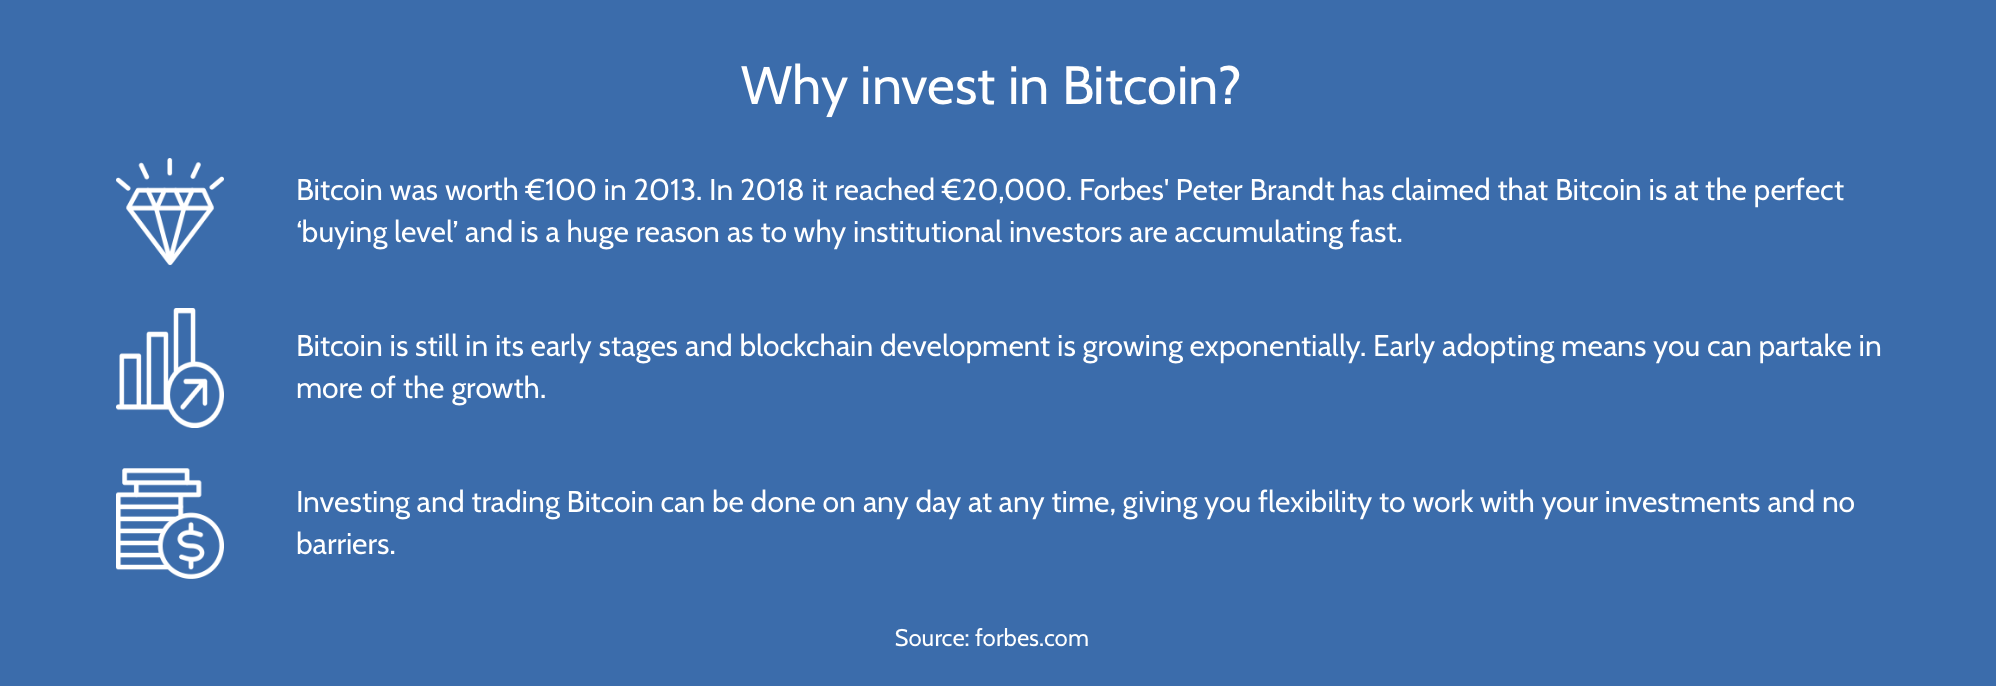 Grunde til at investere i Bitcoin